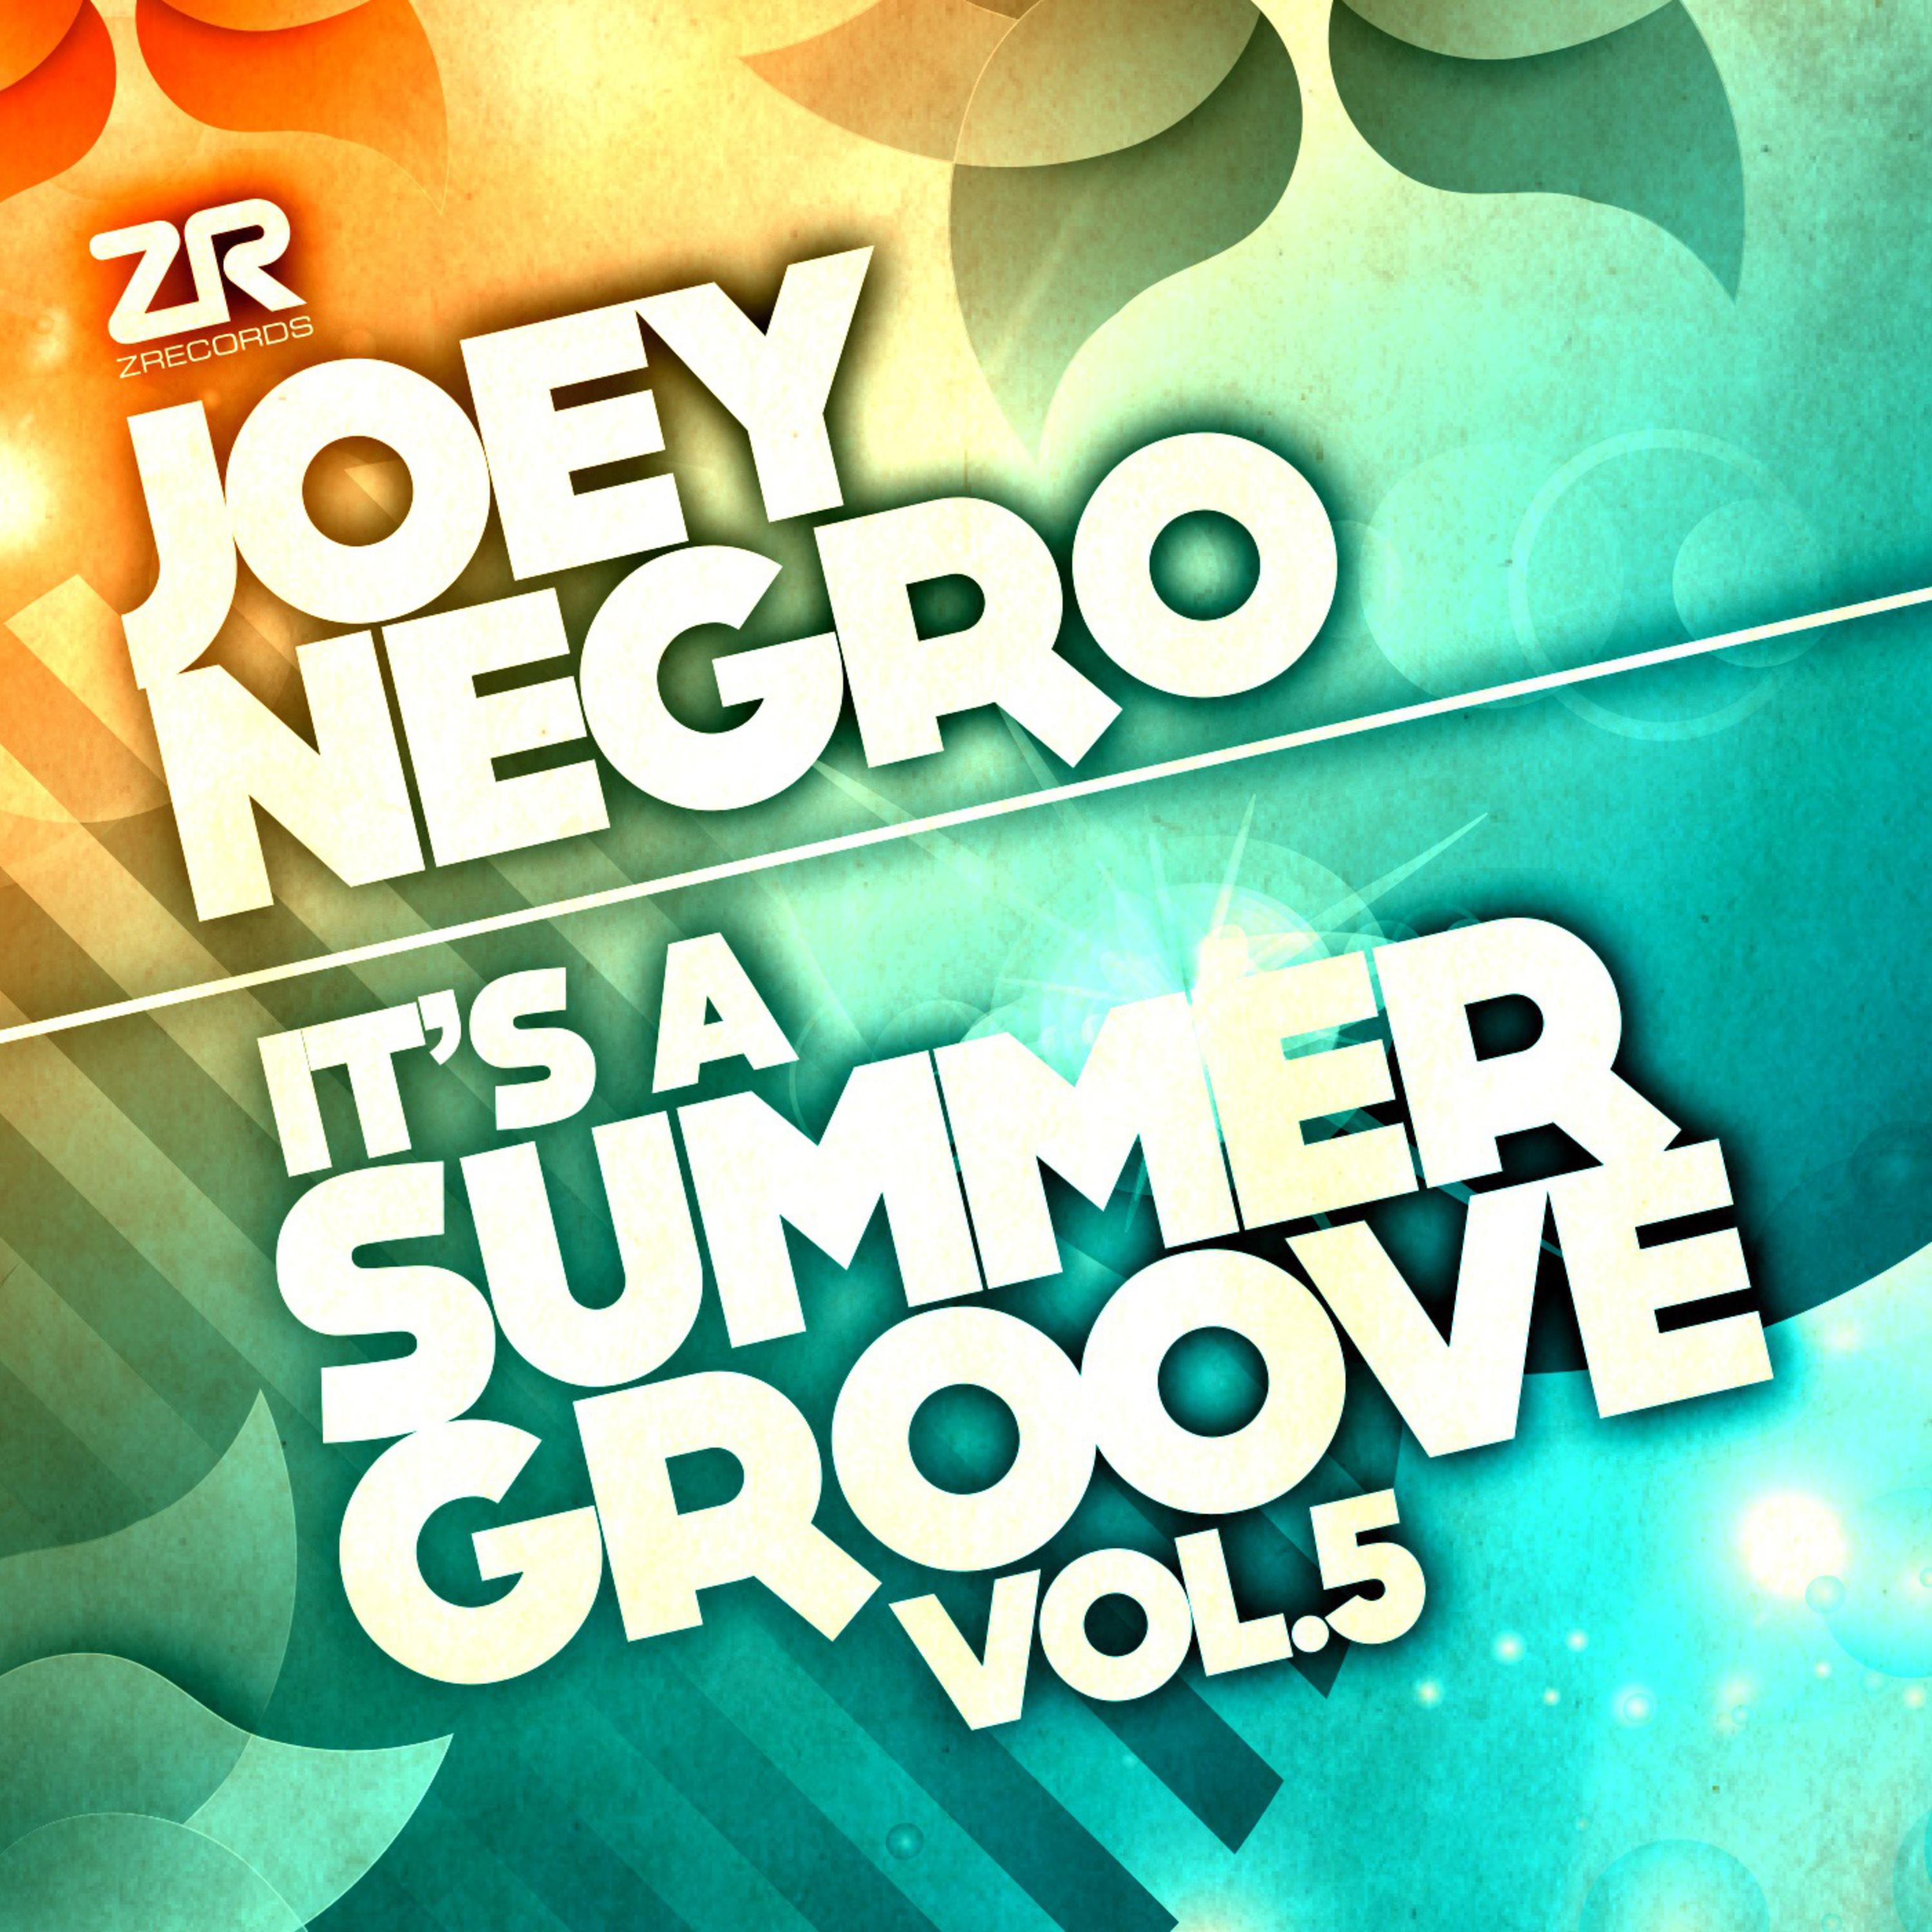 Joey Negro presents It's A Summer Groove Vol. 5